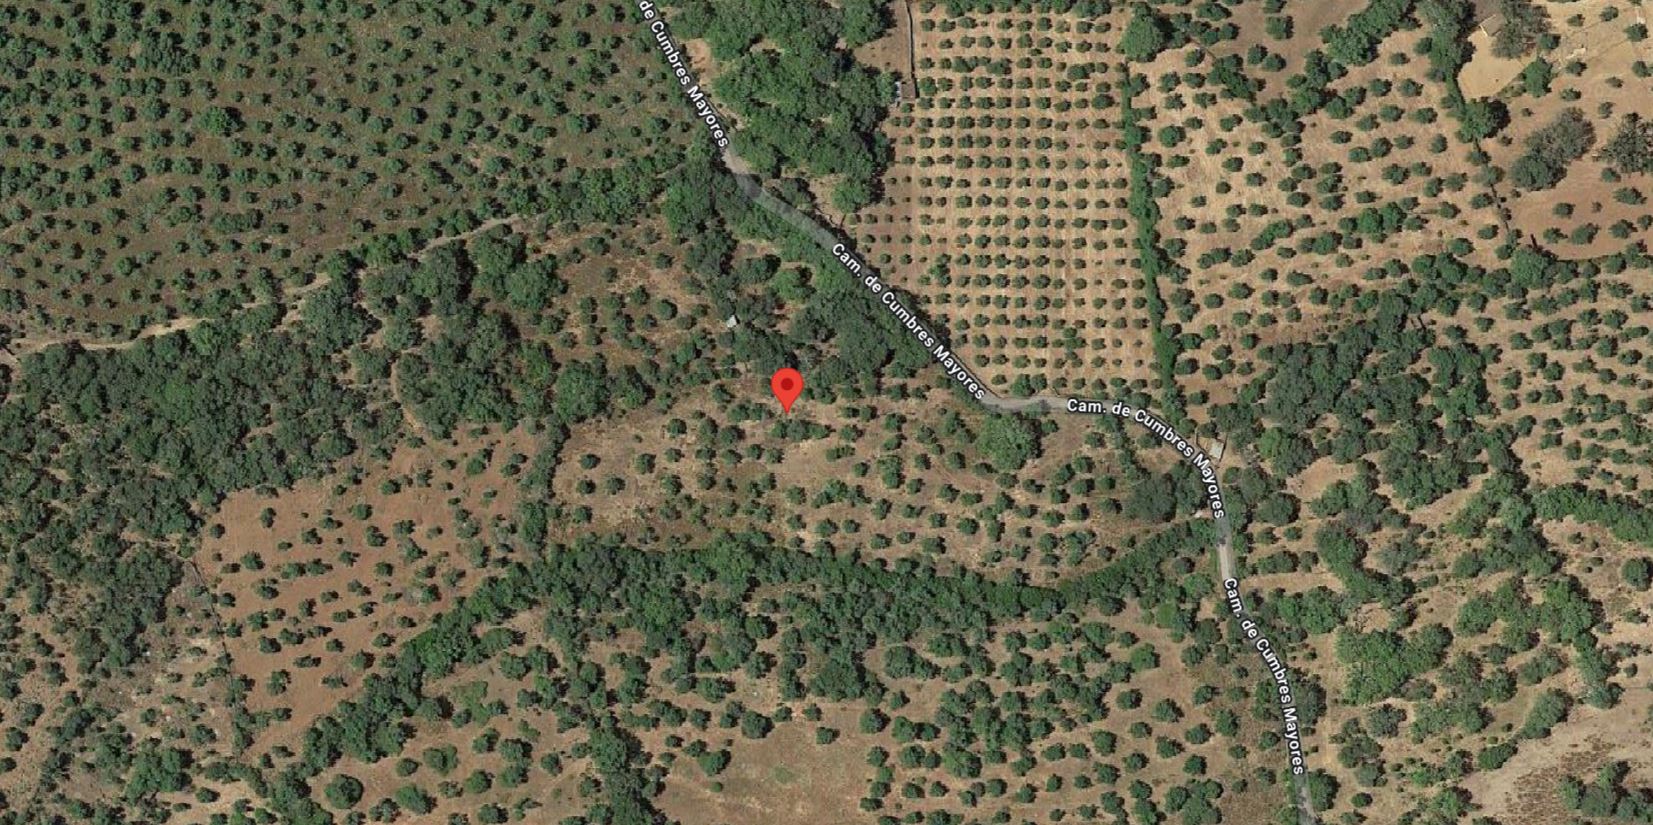 1/3 undivided part of the rustic property in Paraje Sierra del Rey, Hinojales (Huelva). FR 1196 RP Aracena